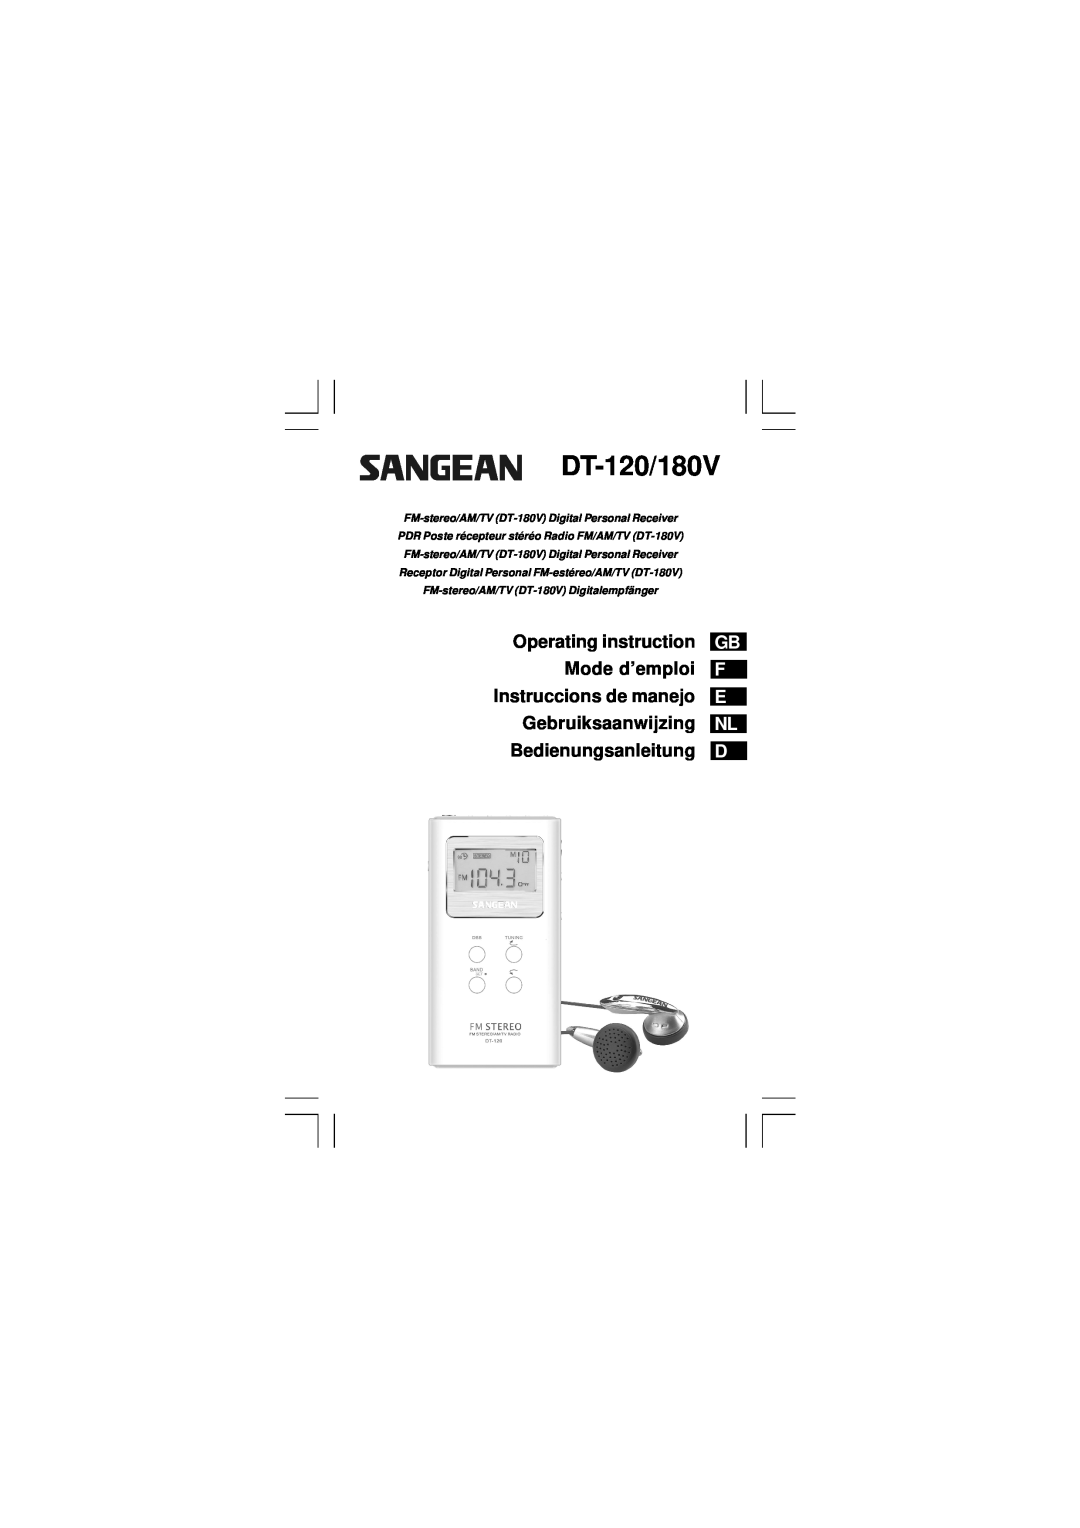 Sangean Electronics manual Gb F E Nl D, DT-120/180V 